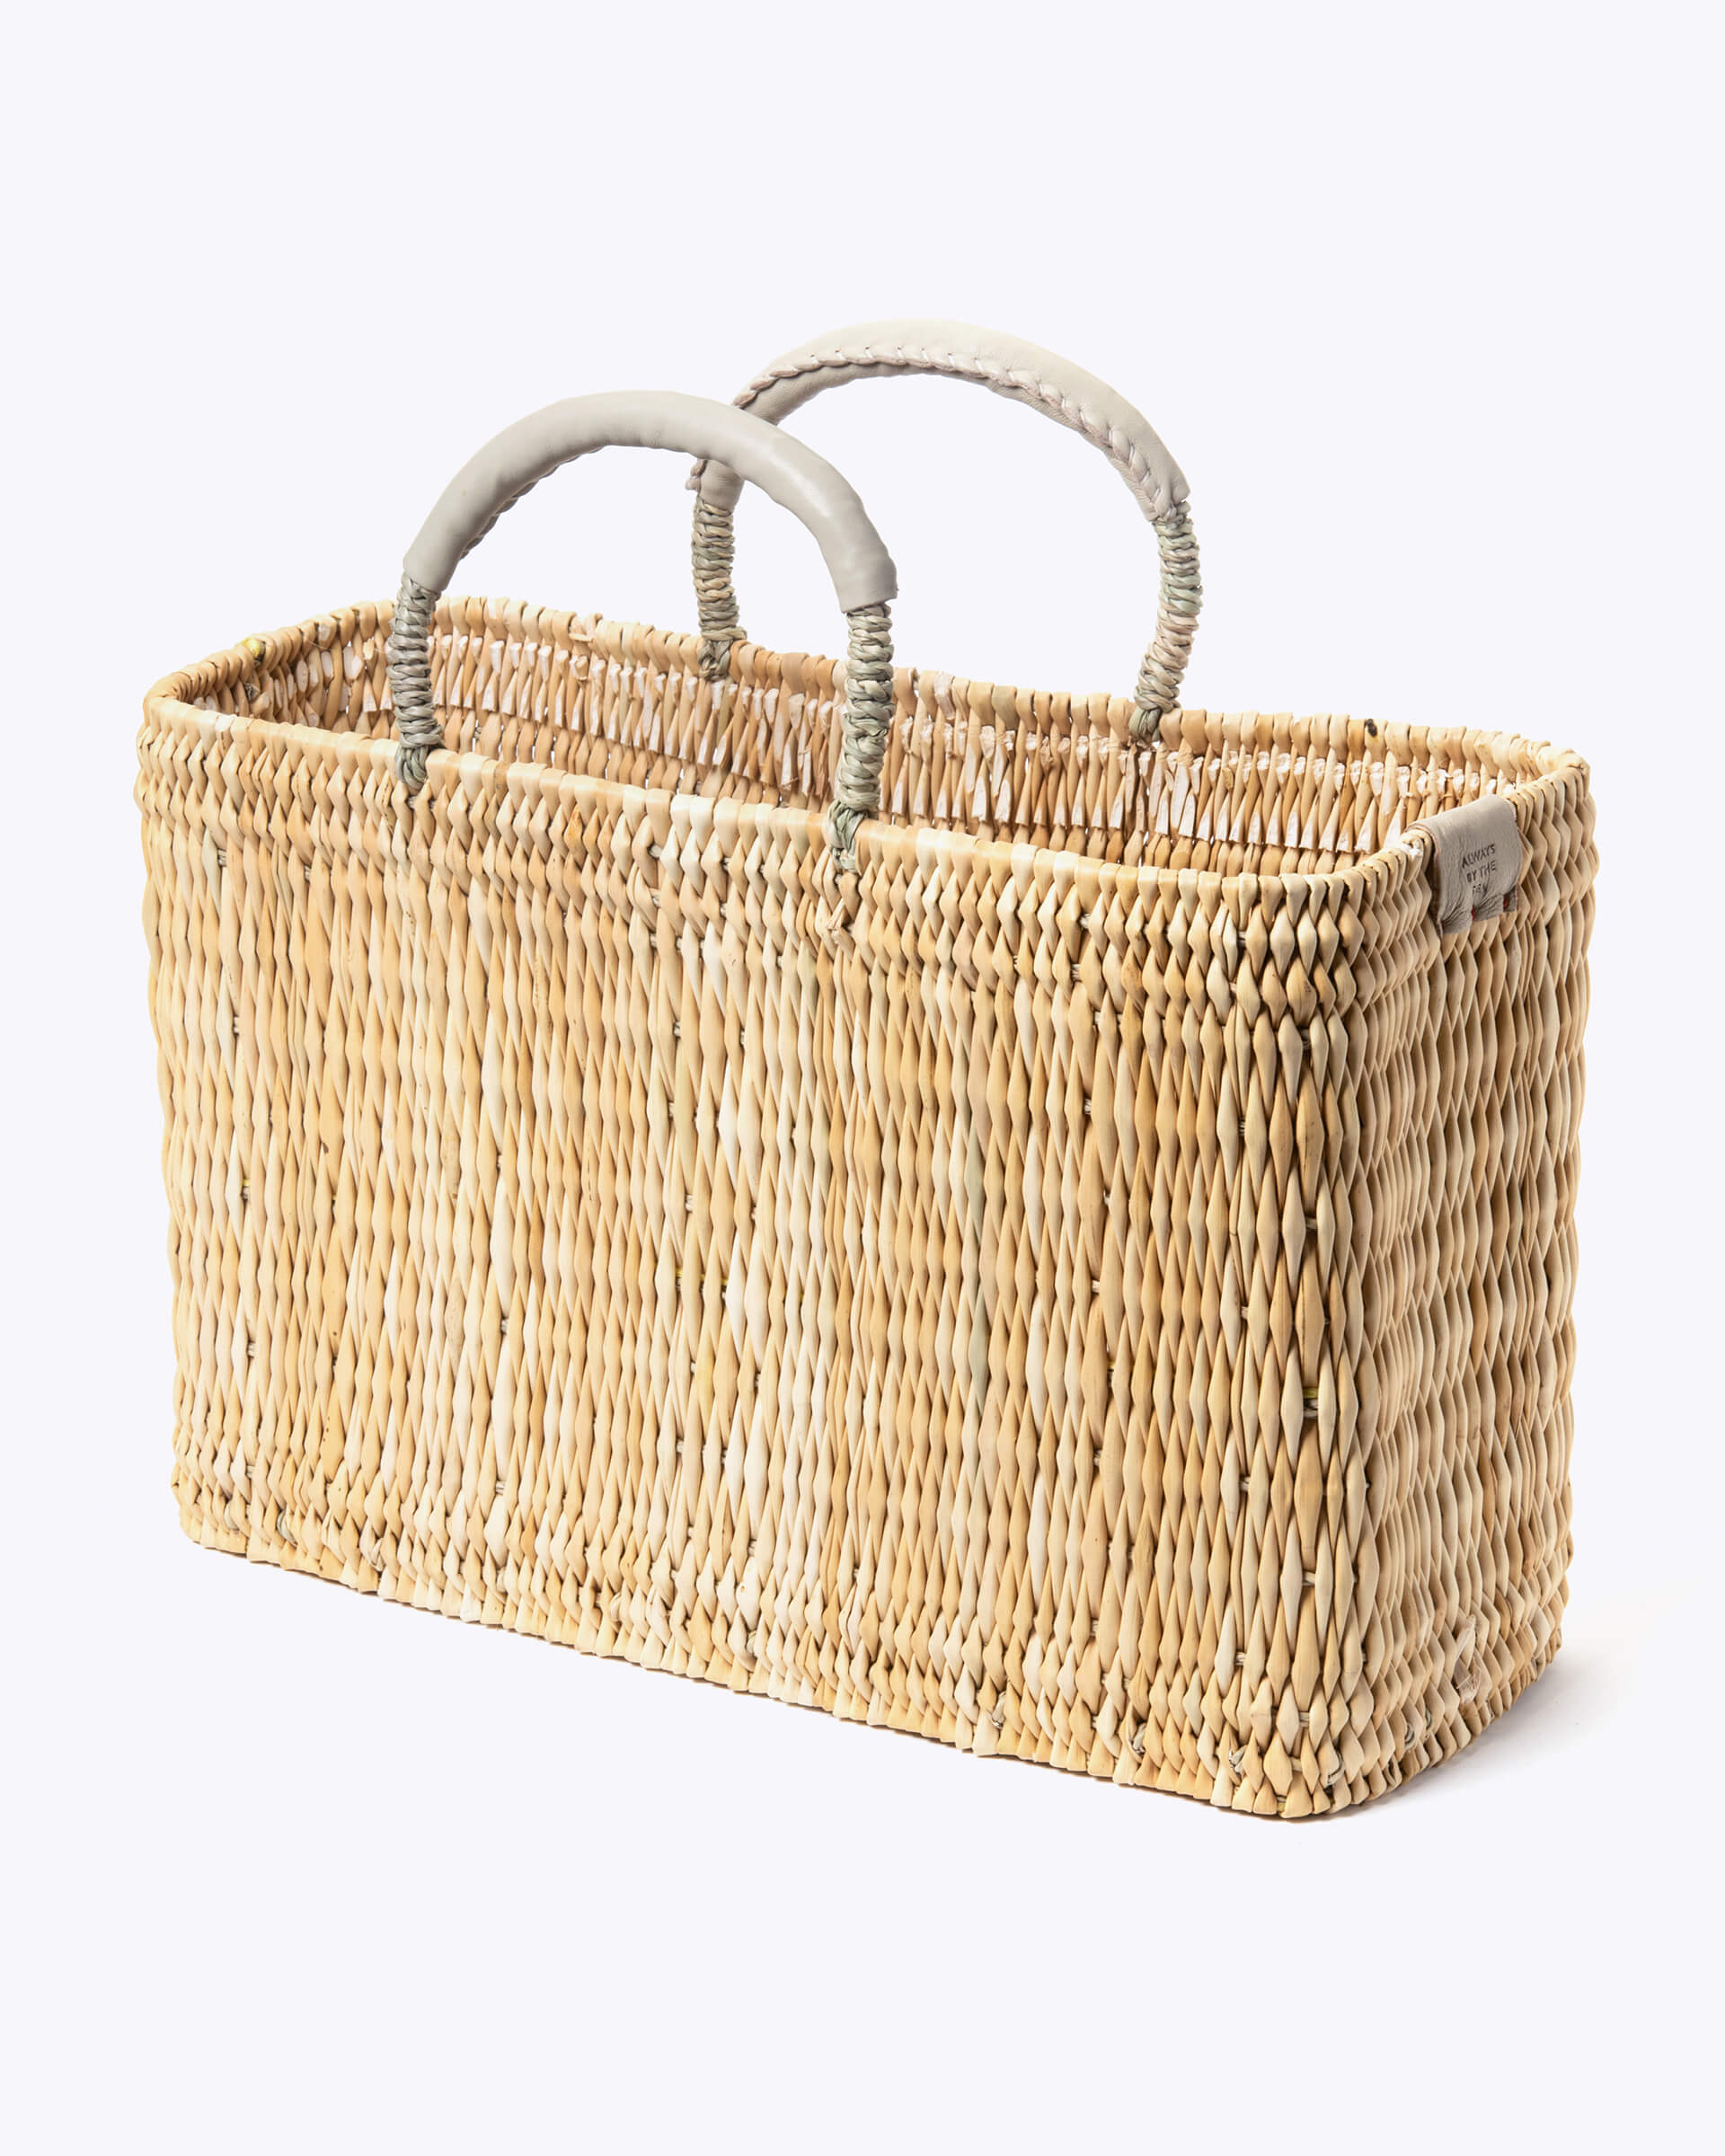 Handwoven Market Baskets For Home Décor Or Beach Days - MERSEA